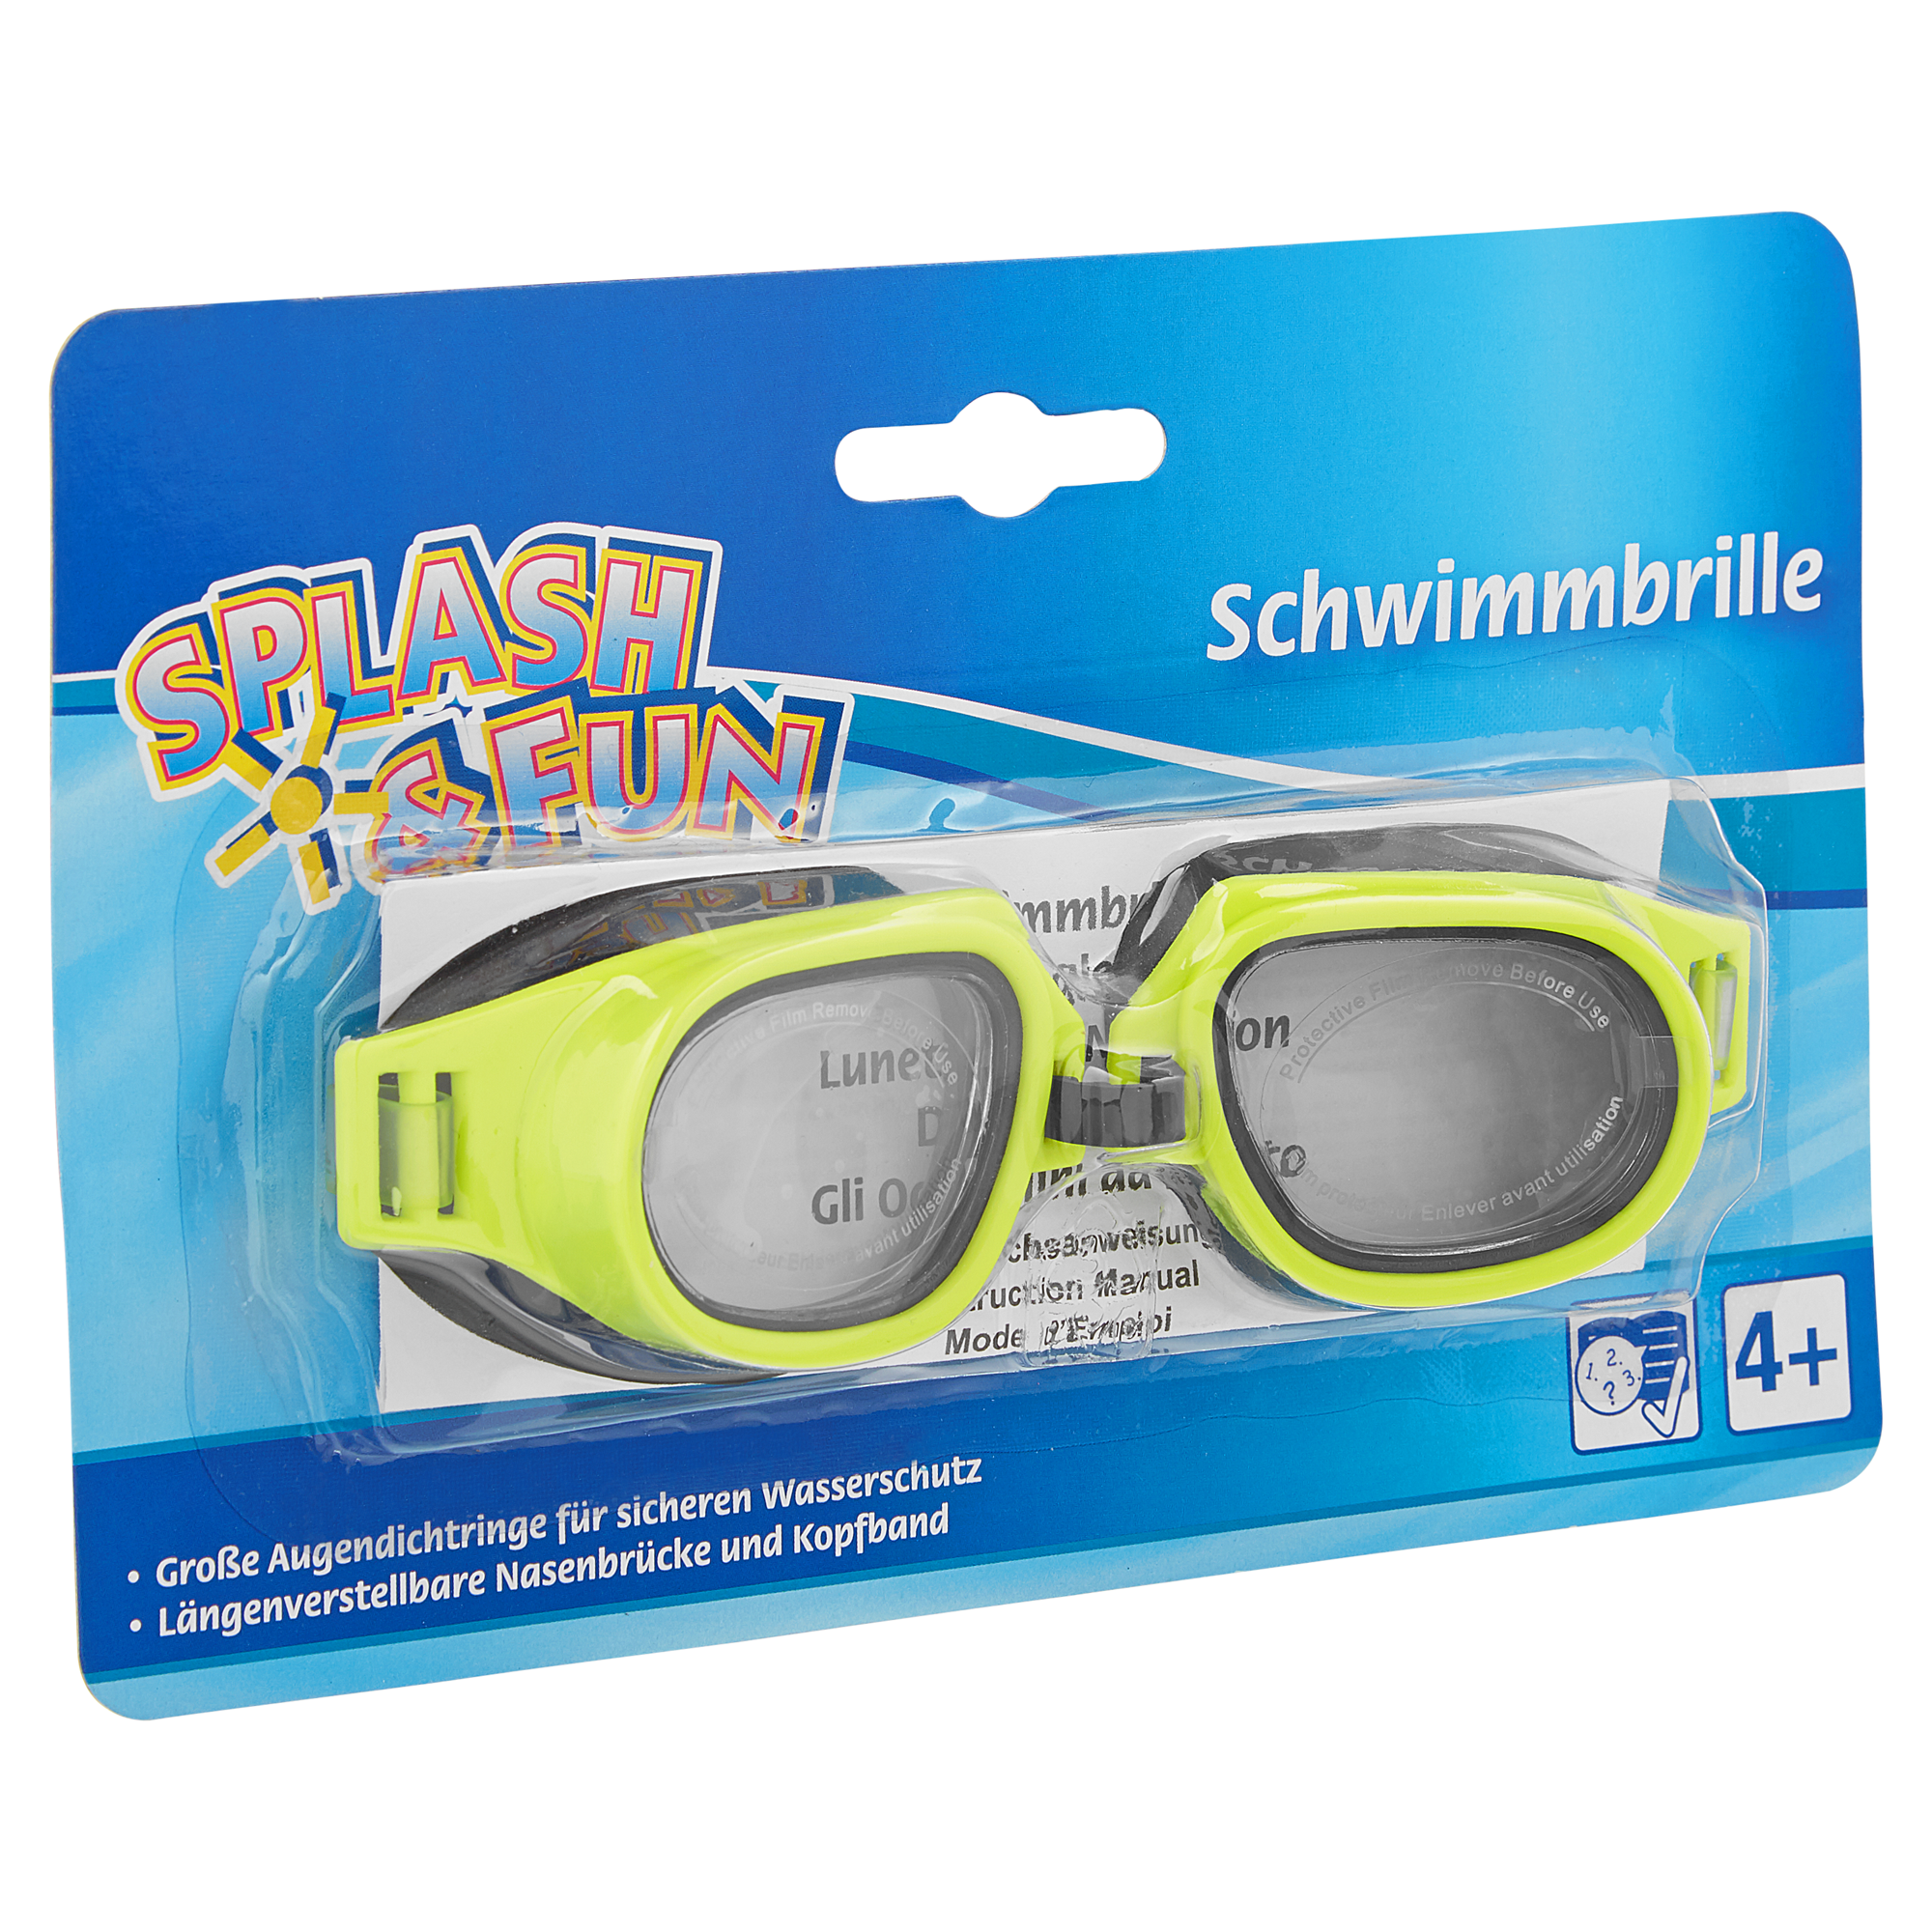 Schwimmbrille "Splash & Fun" + product picture